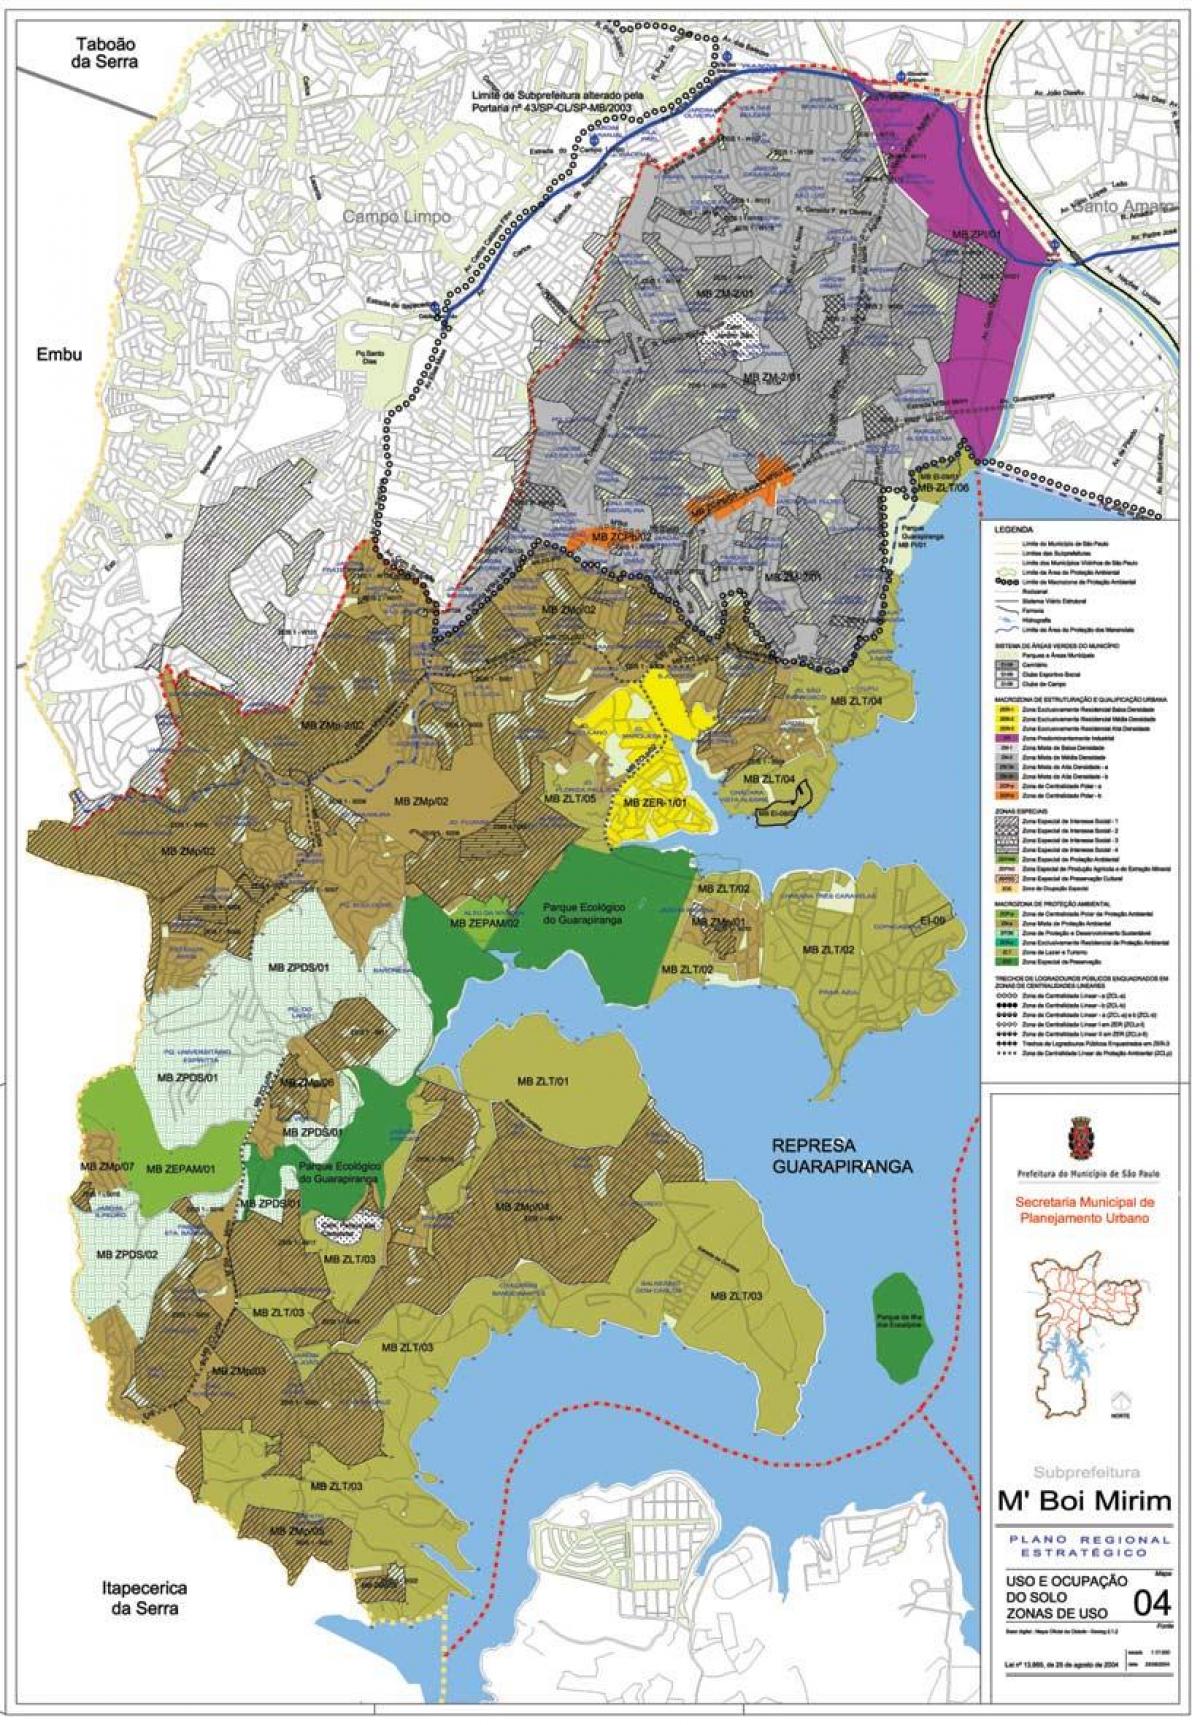 Mapa M'Boi Mirim São Paulo - lurzoruaren Okupazioa